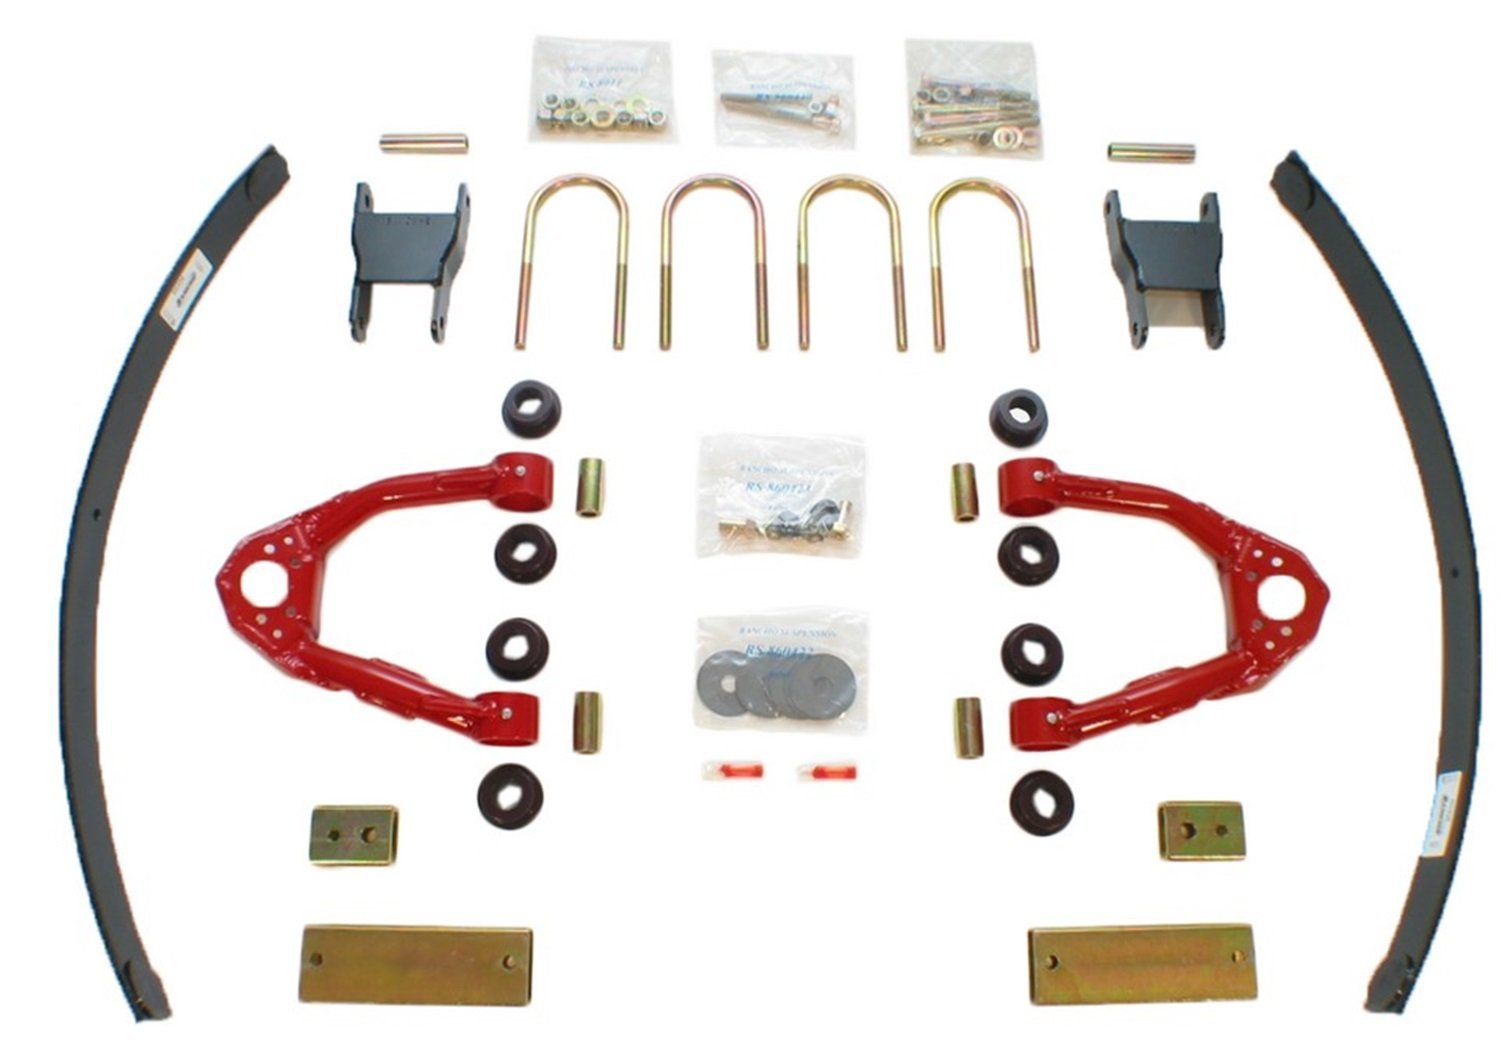 1993 Nissan hardbody suspension lift kits #2